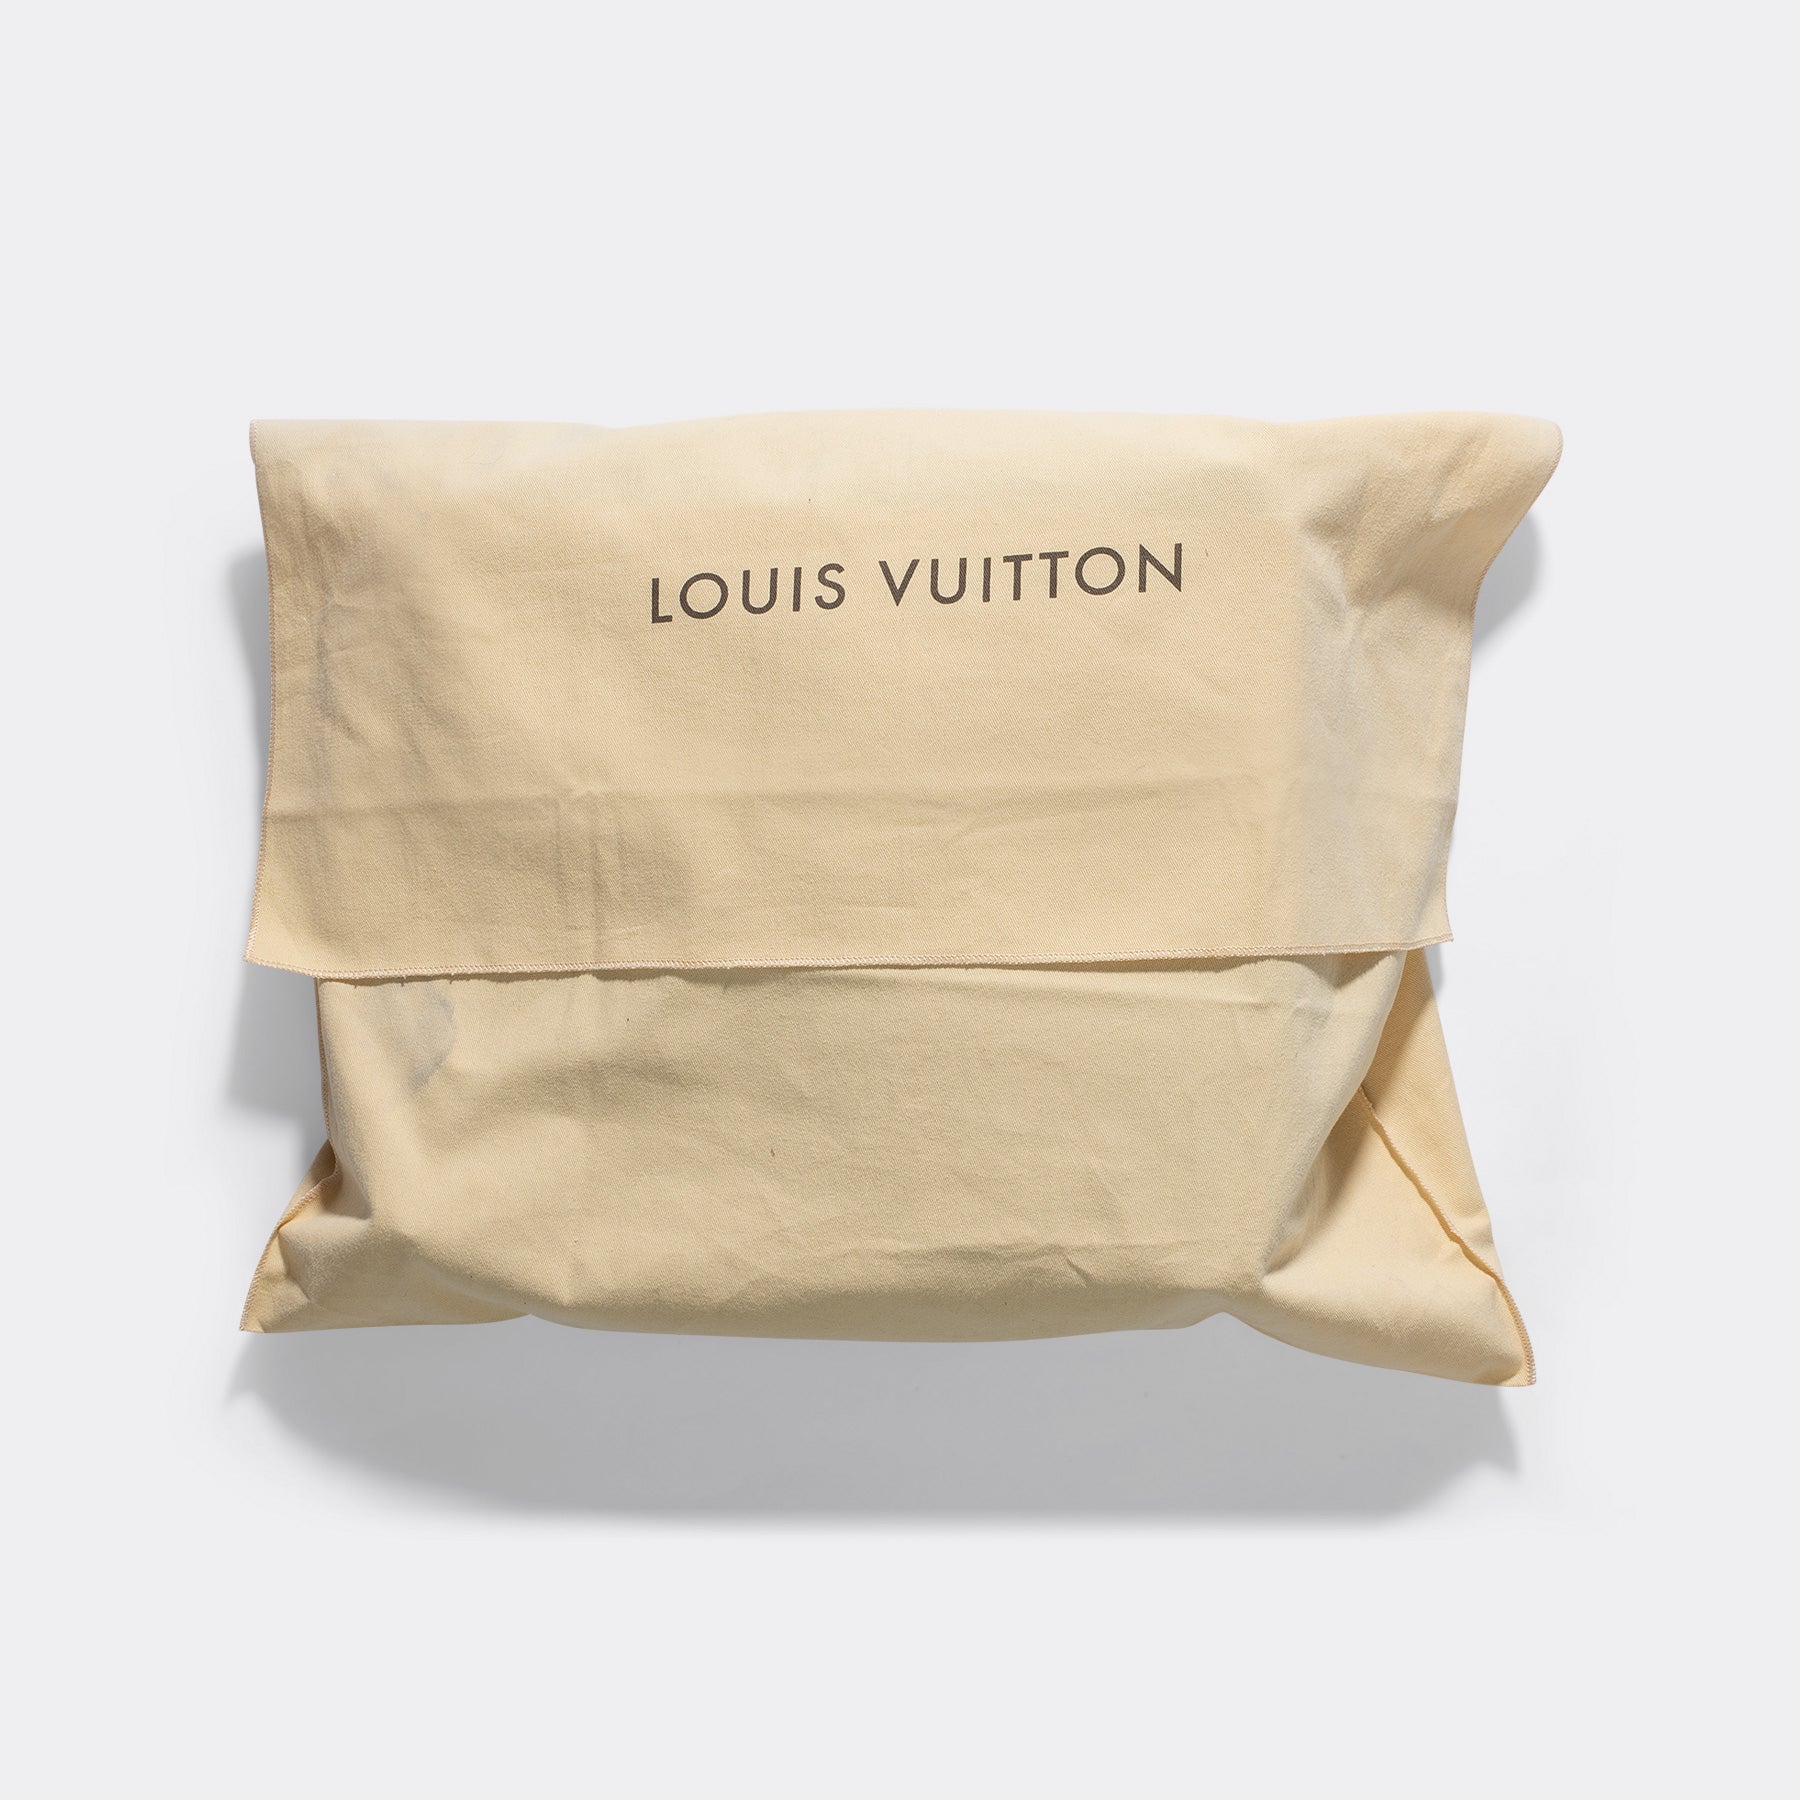 Louis Vuitton Soana Sacoche Limited Edition Känguruleder Tasche